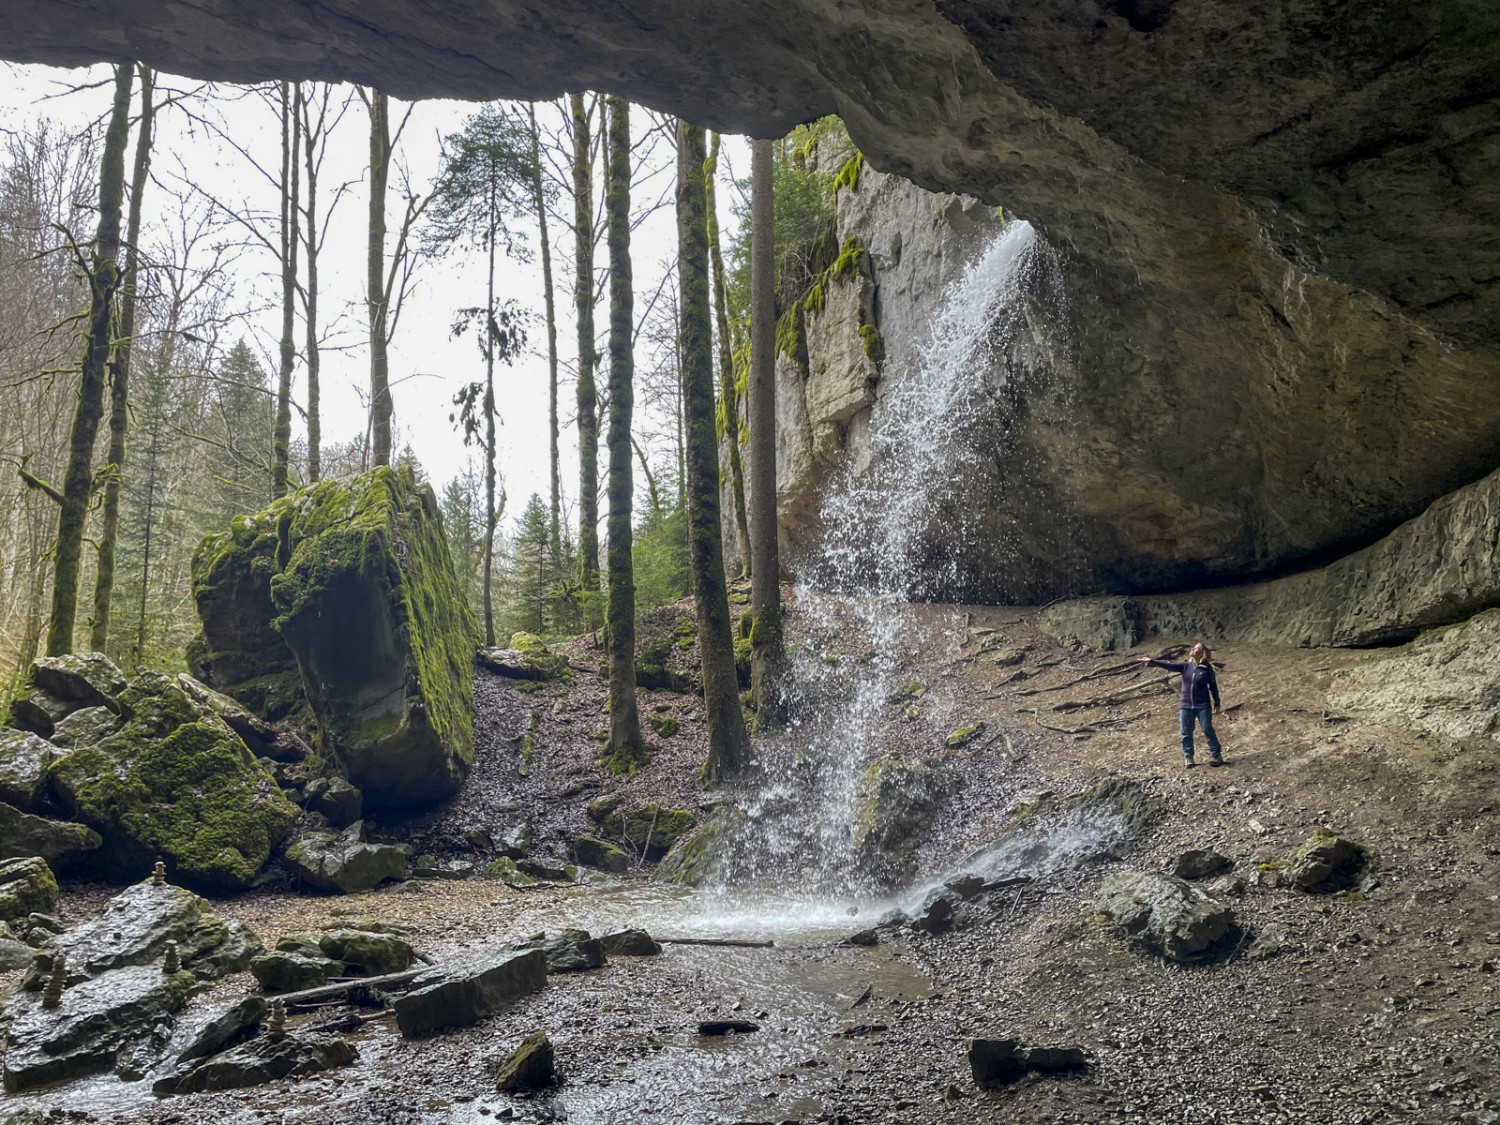 Naturwunder abseits ausgetretener Pfade: Wasserfall bei Les Pommerats. Bild: Rémy Kappeler